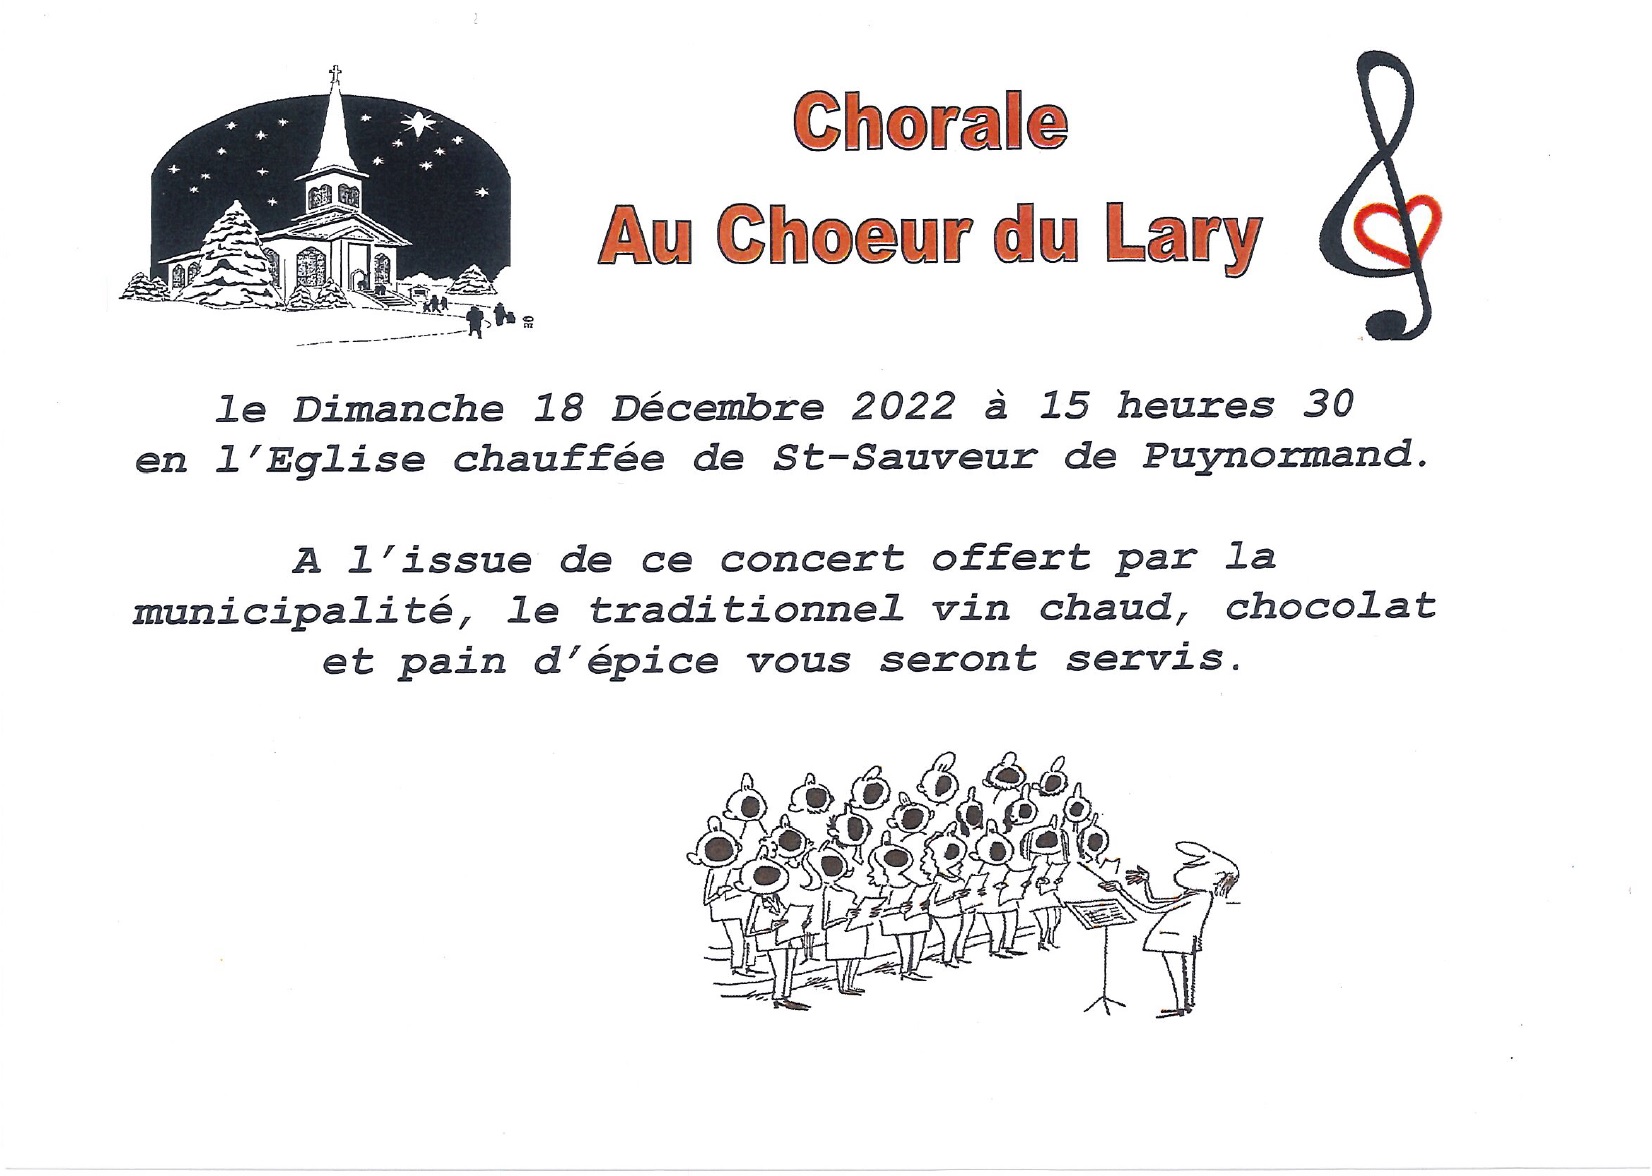 Chorale Au Choeur du Lary.jpg